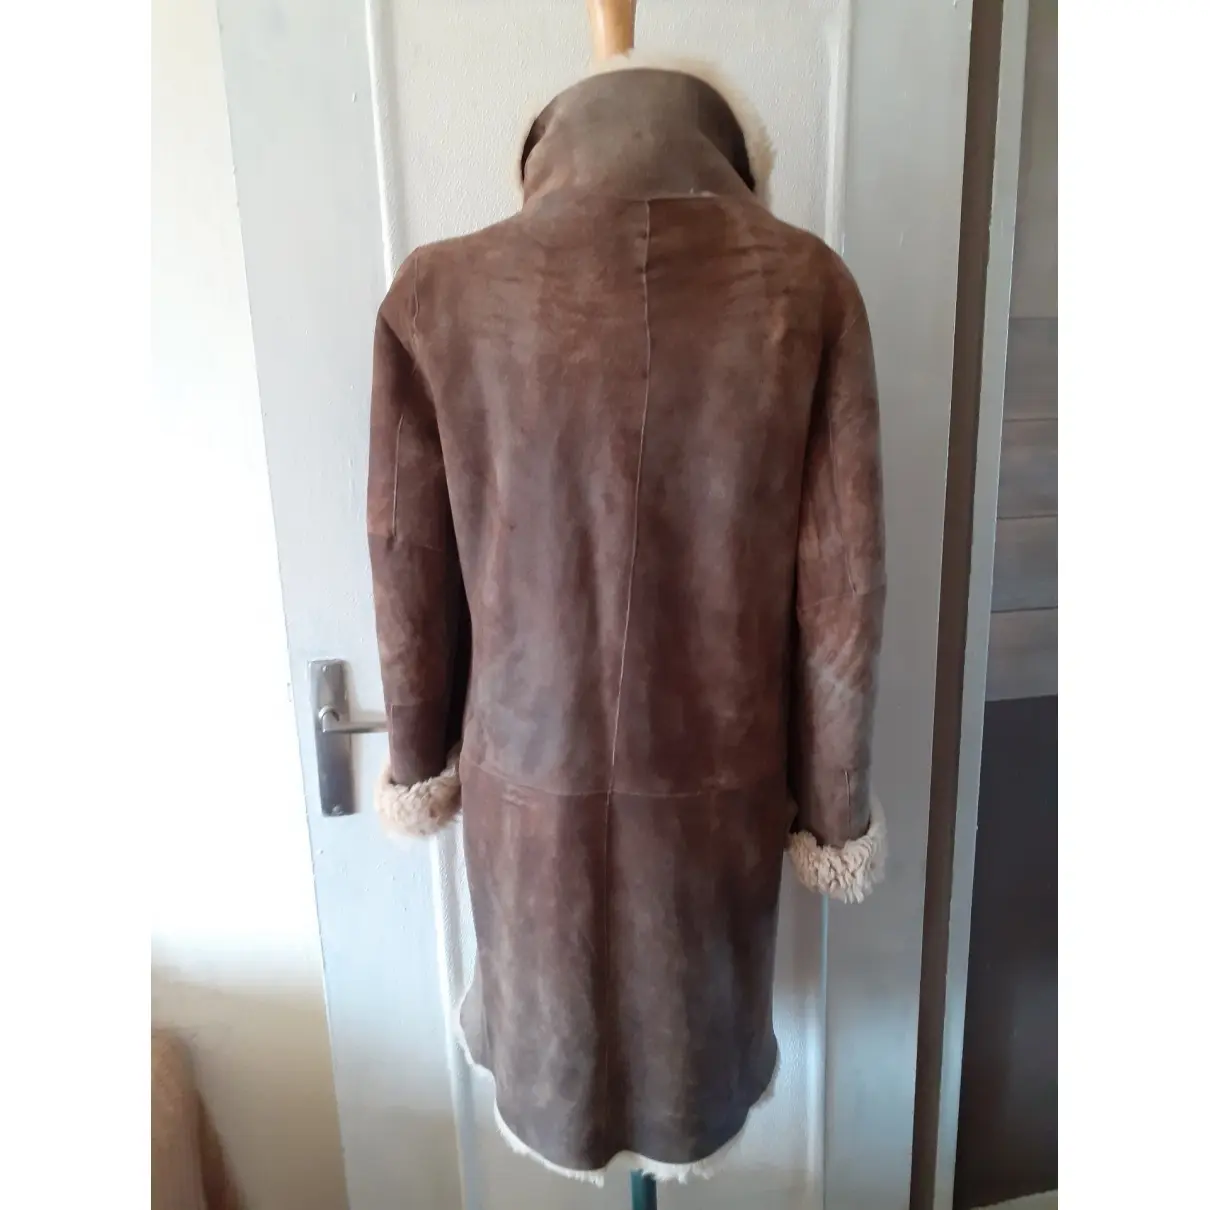 Joseph Mongolian lamb coat for sale